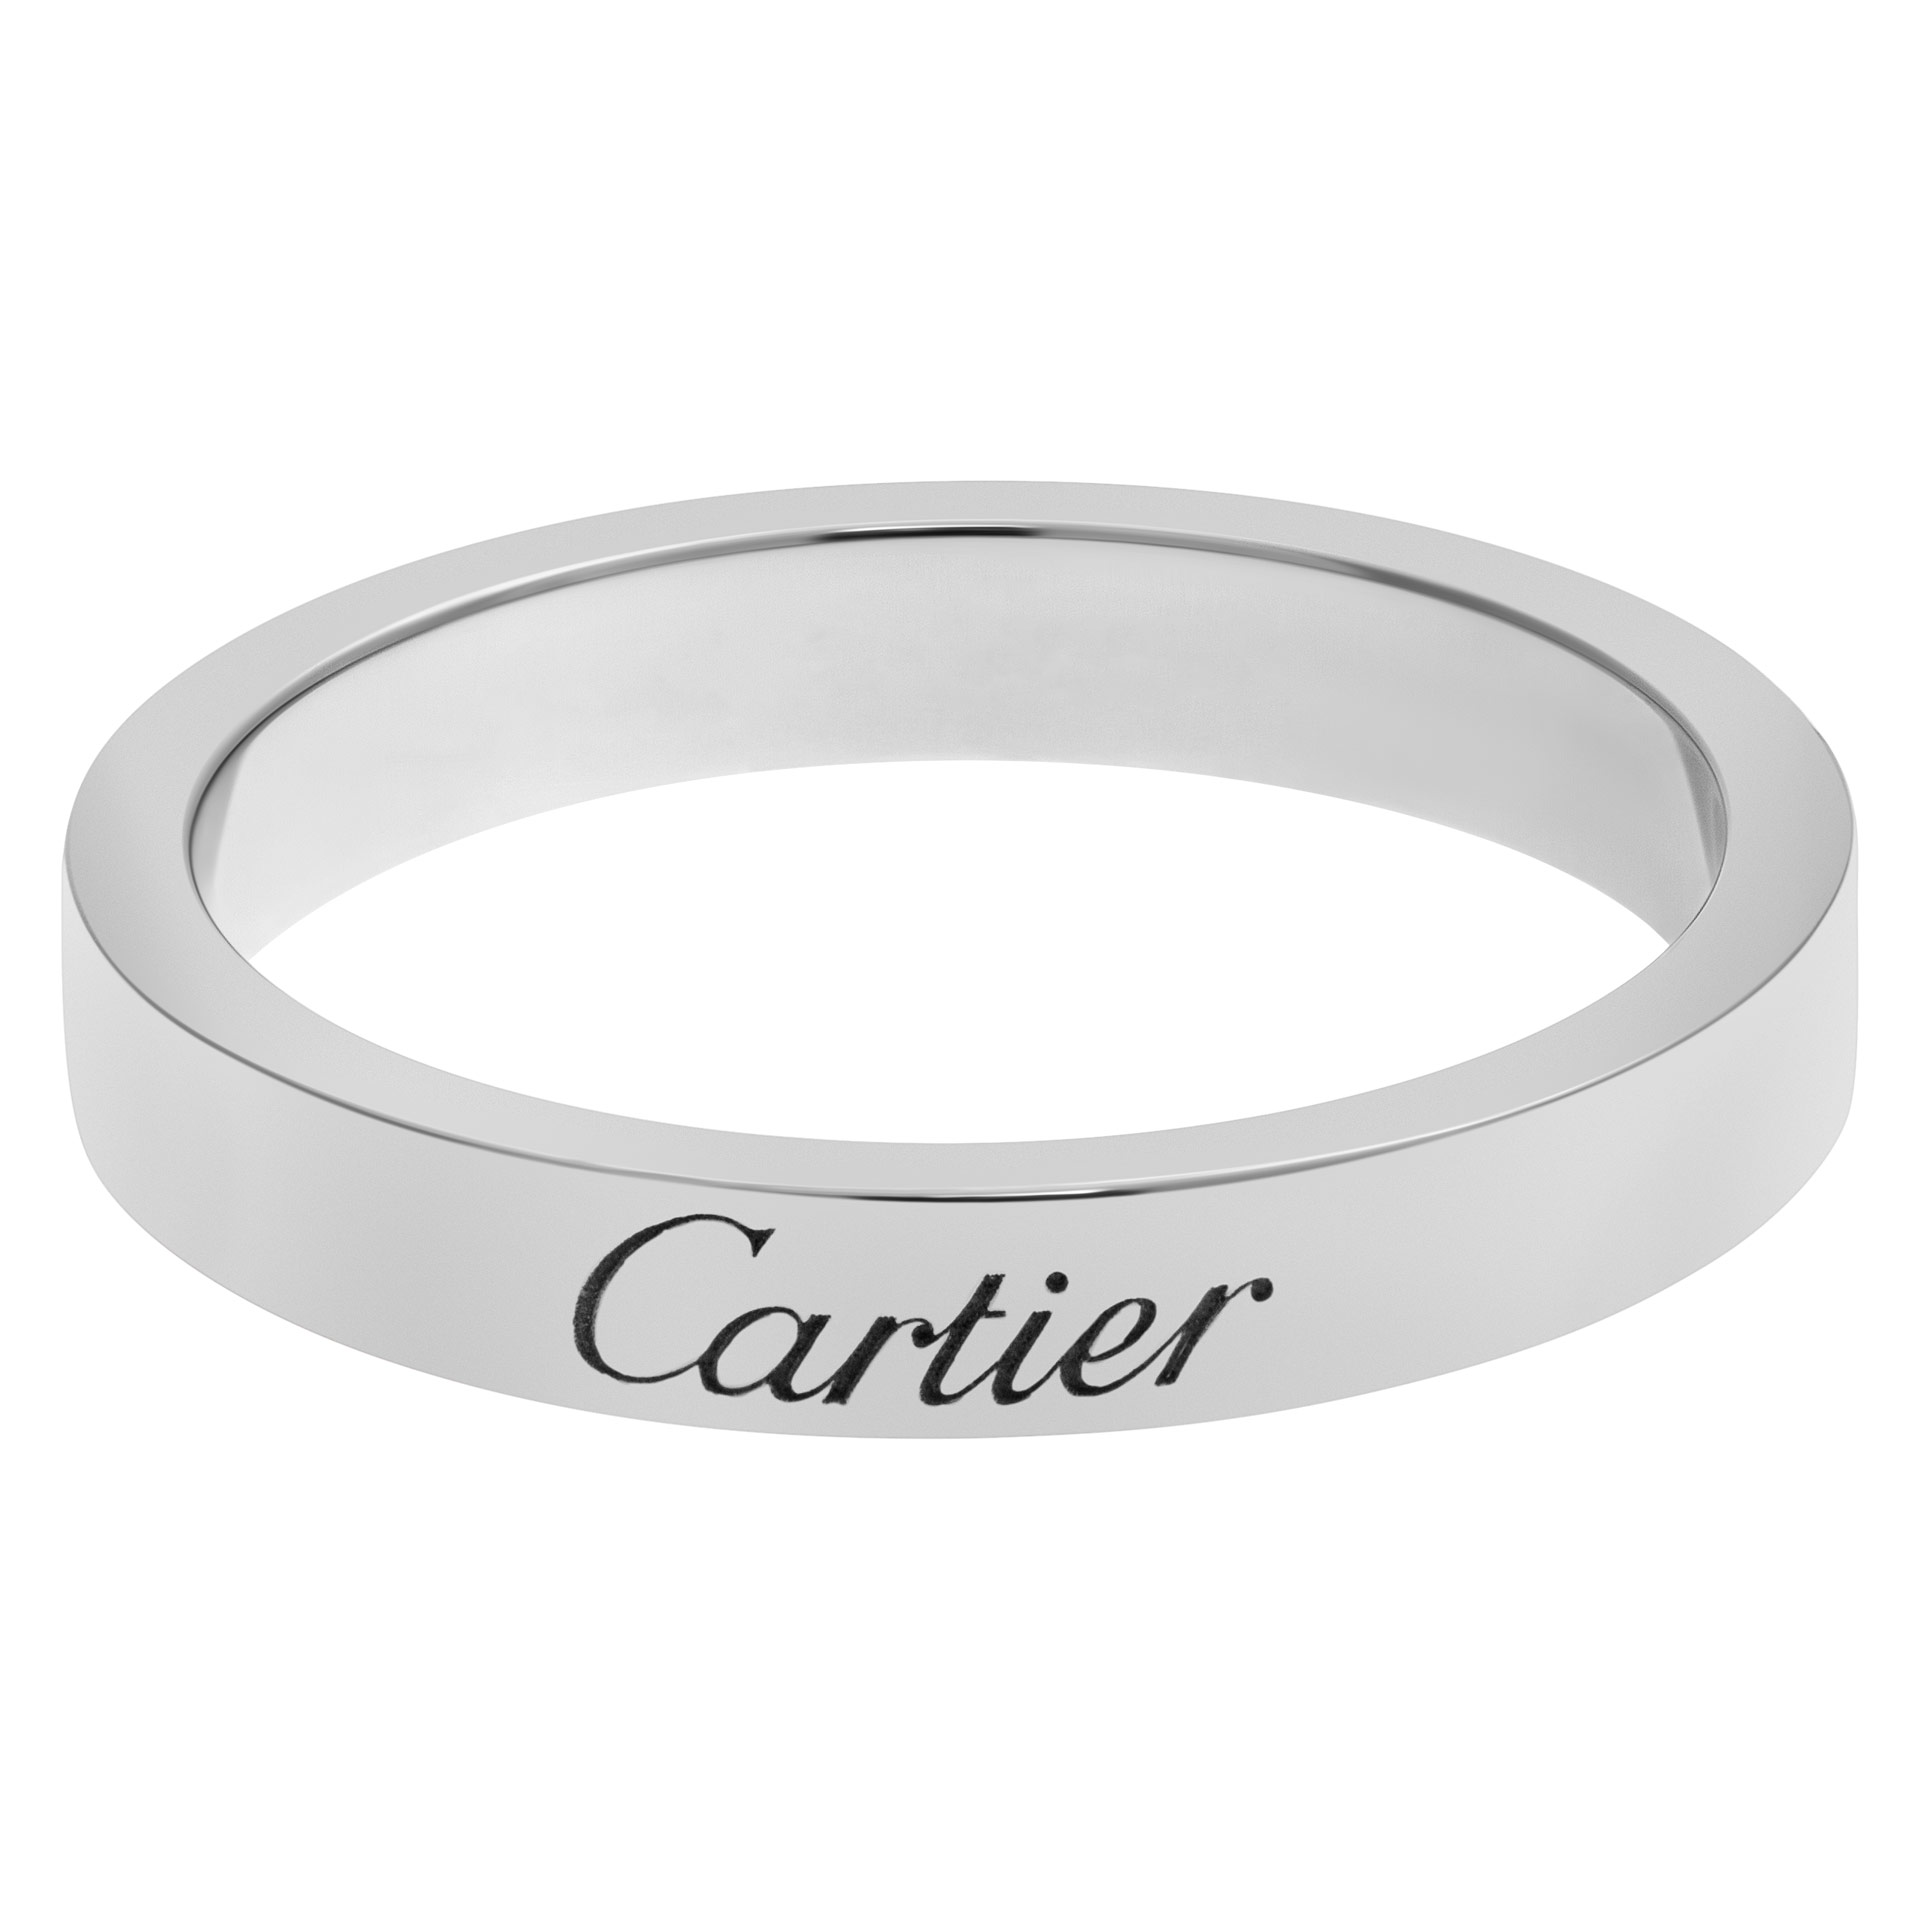 C De Cartier wedding band in Platinum image 1